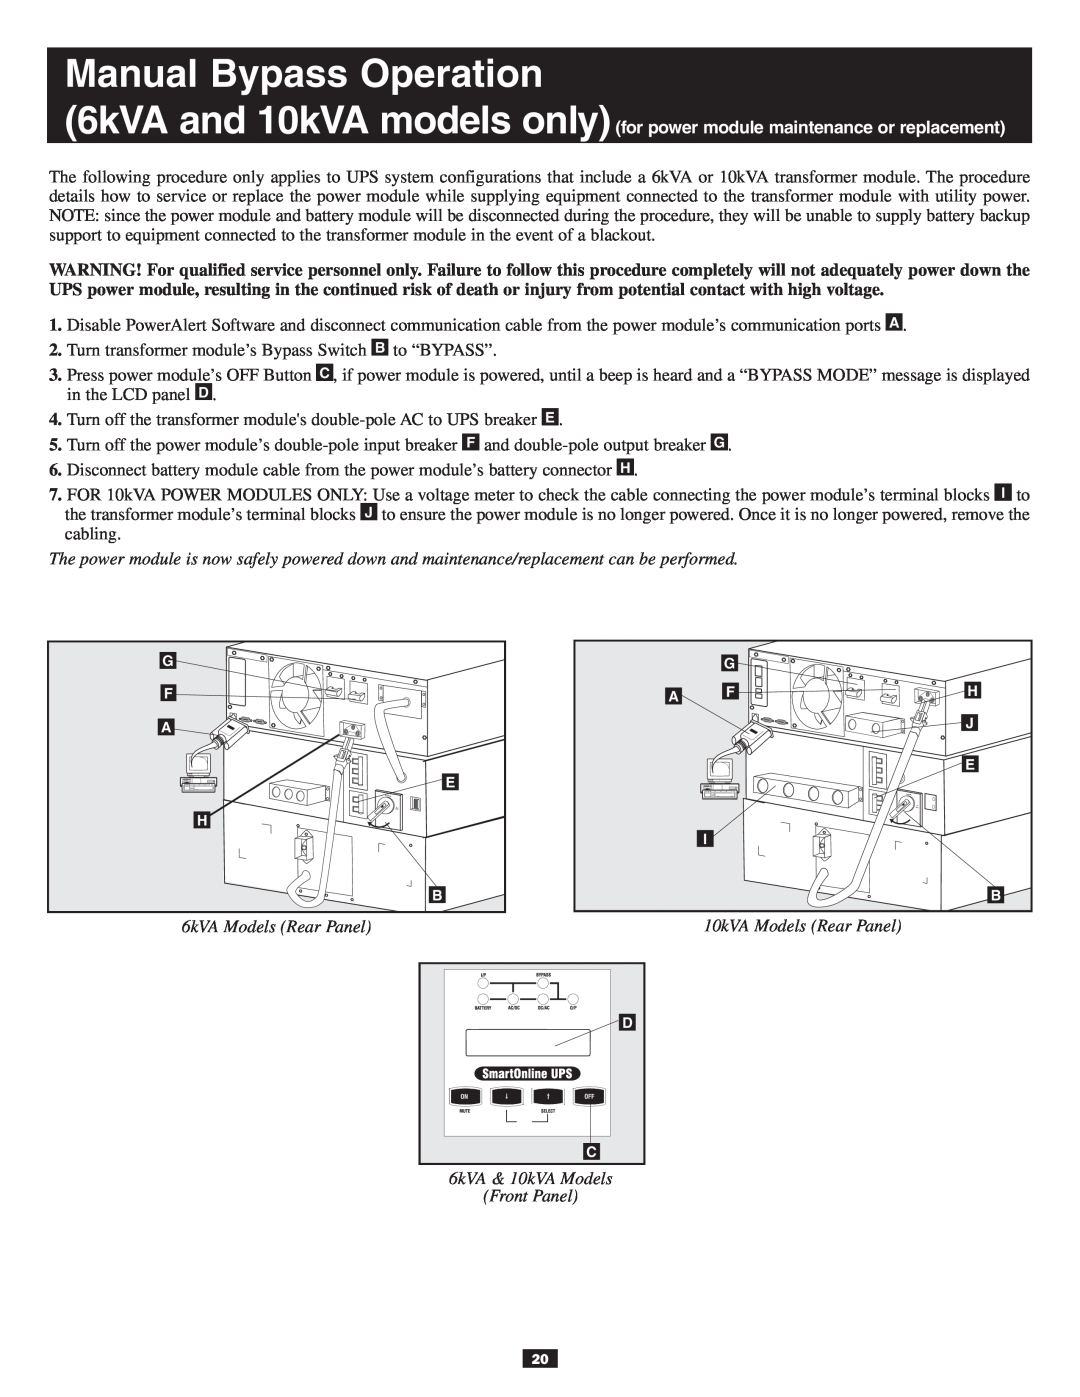 Tripp Lite 10KVA owner manual Manual Bypass Operation, 6kVA Models Rear Panel, 6kVA & 10kVA Models Front Panel 